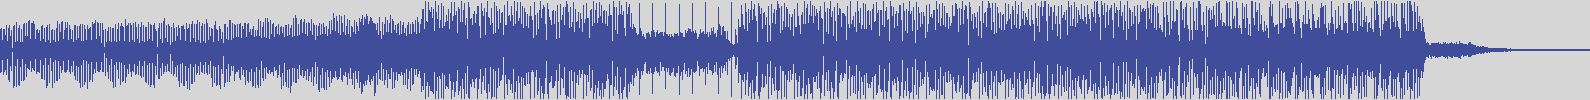 upr [UPR029] Alek Drive - Cronos [Original Mix] audio wave form